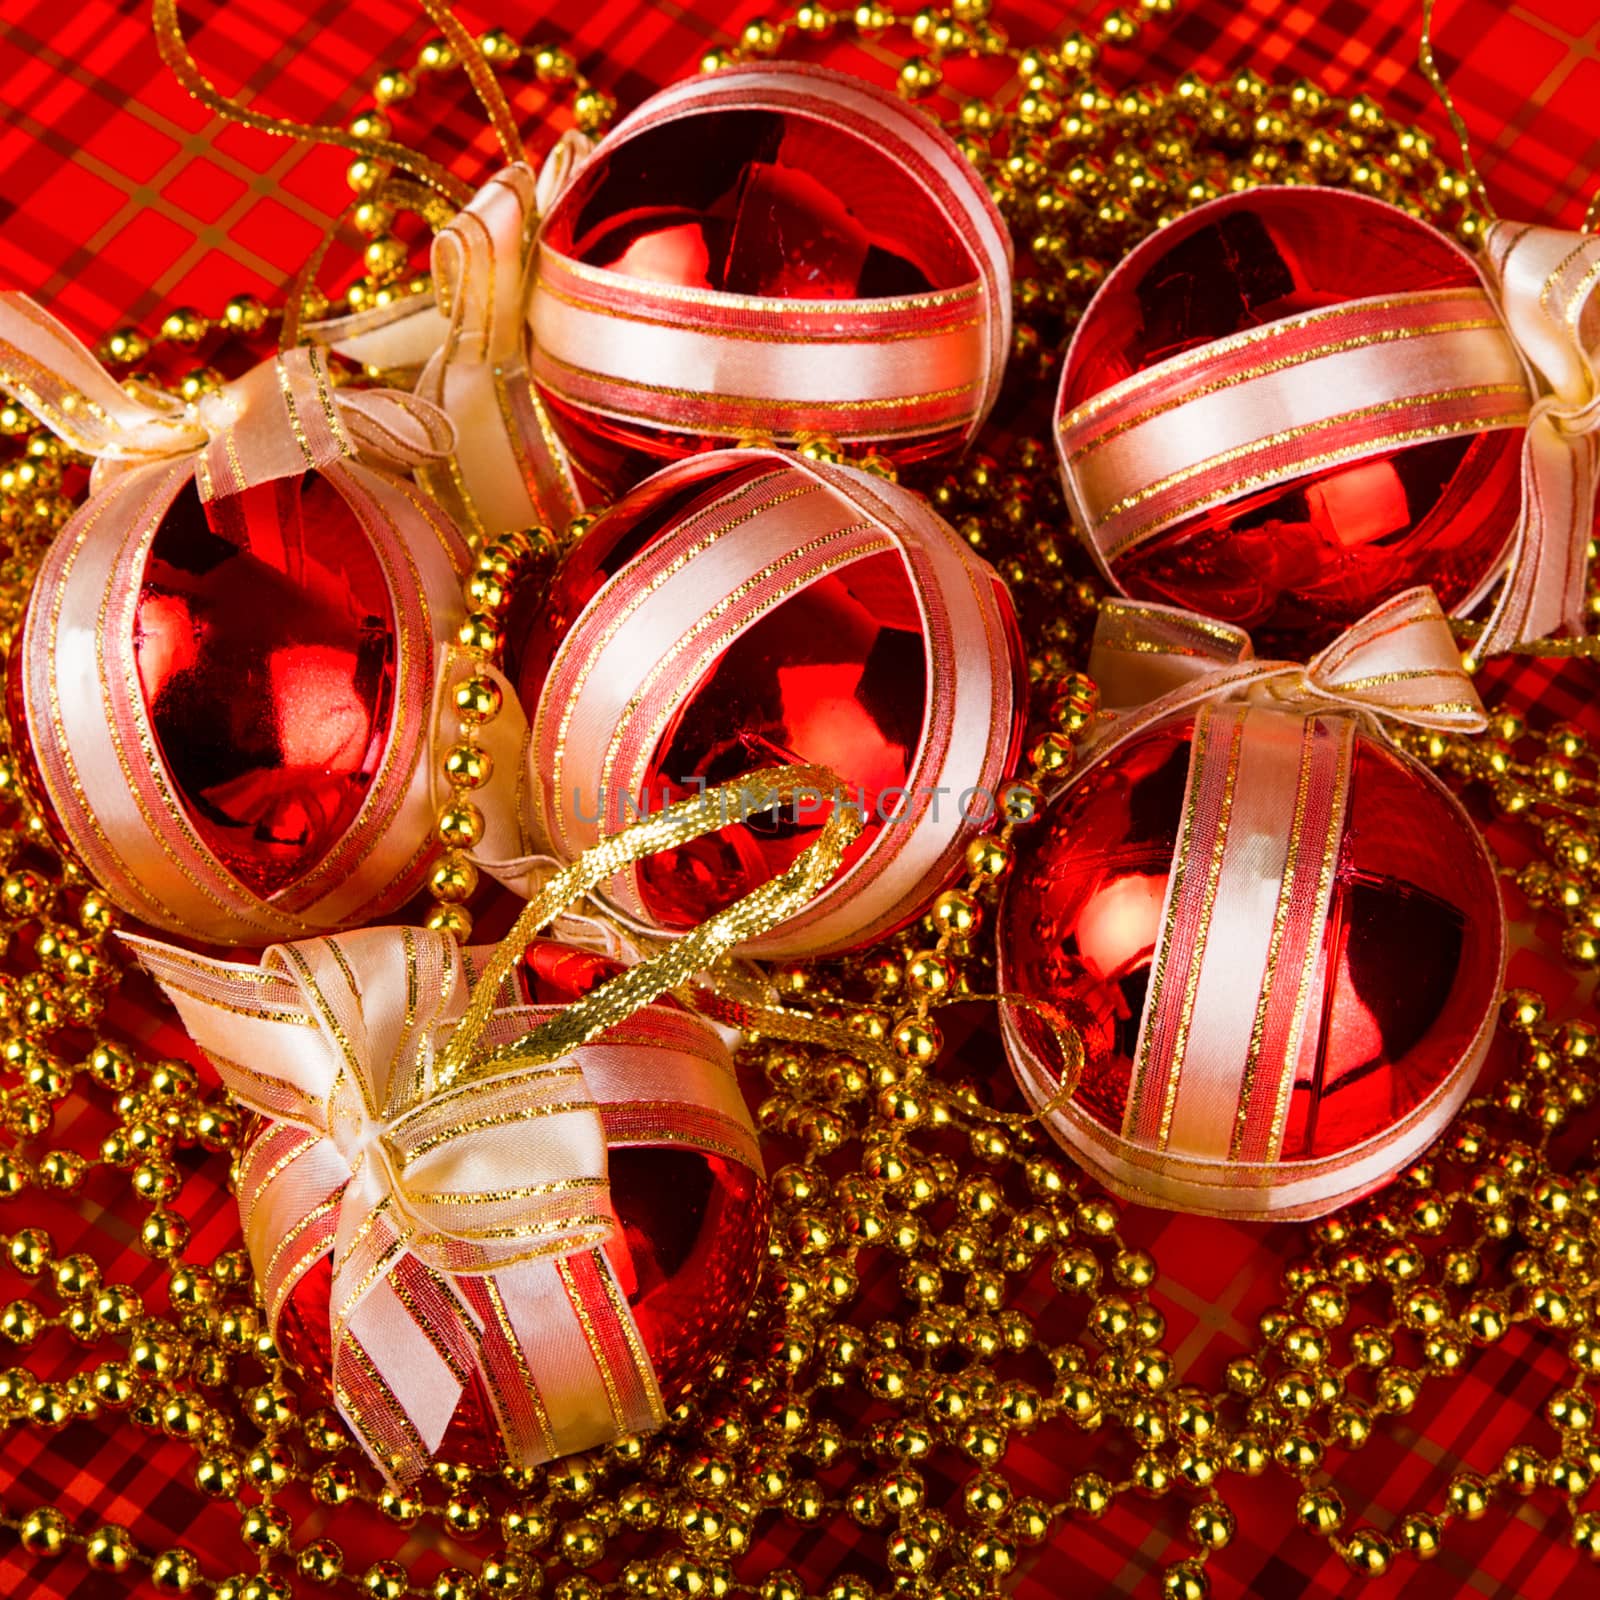 Red Christmas balls by grigorenko